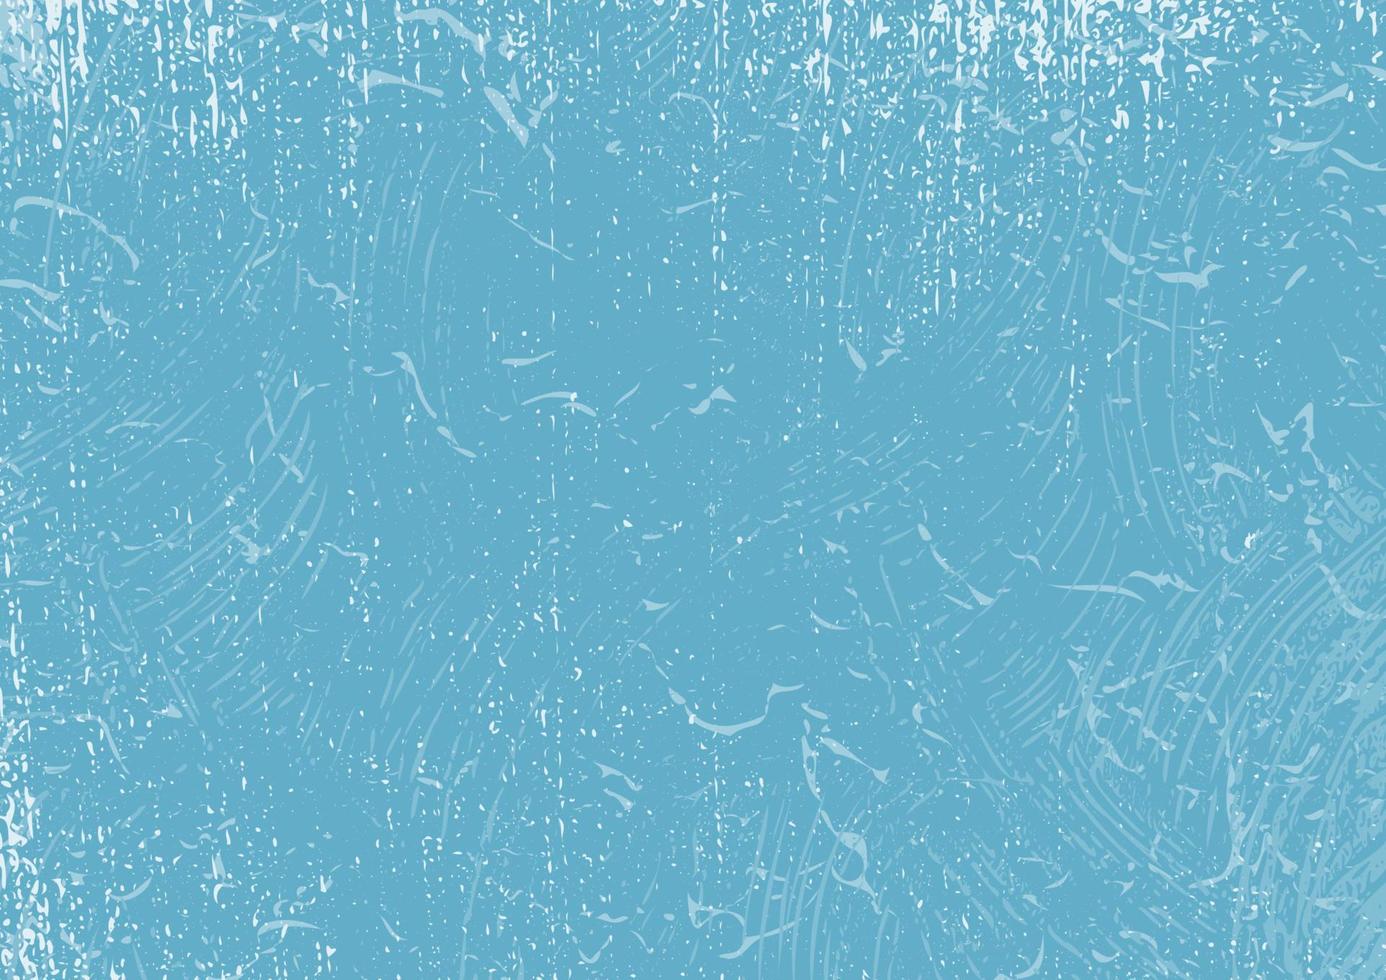 Grunge distressed texture wallpaper background vector